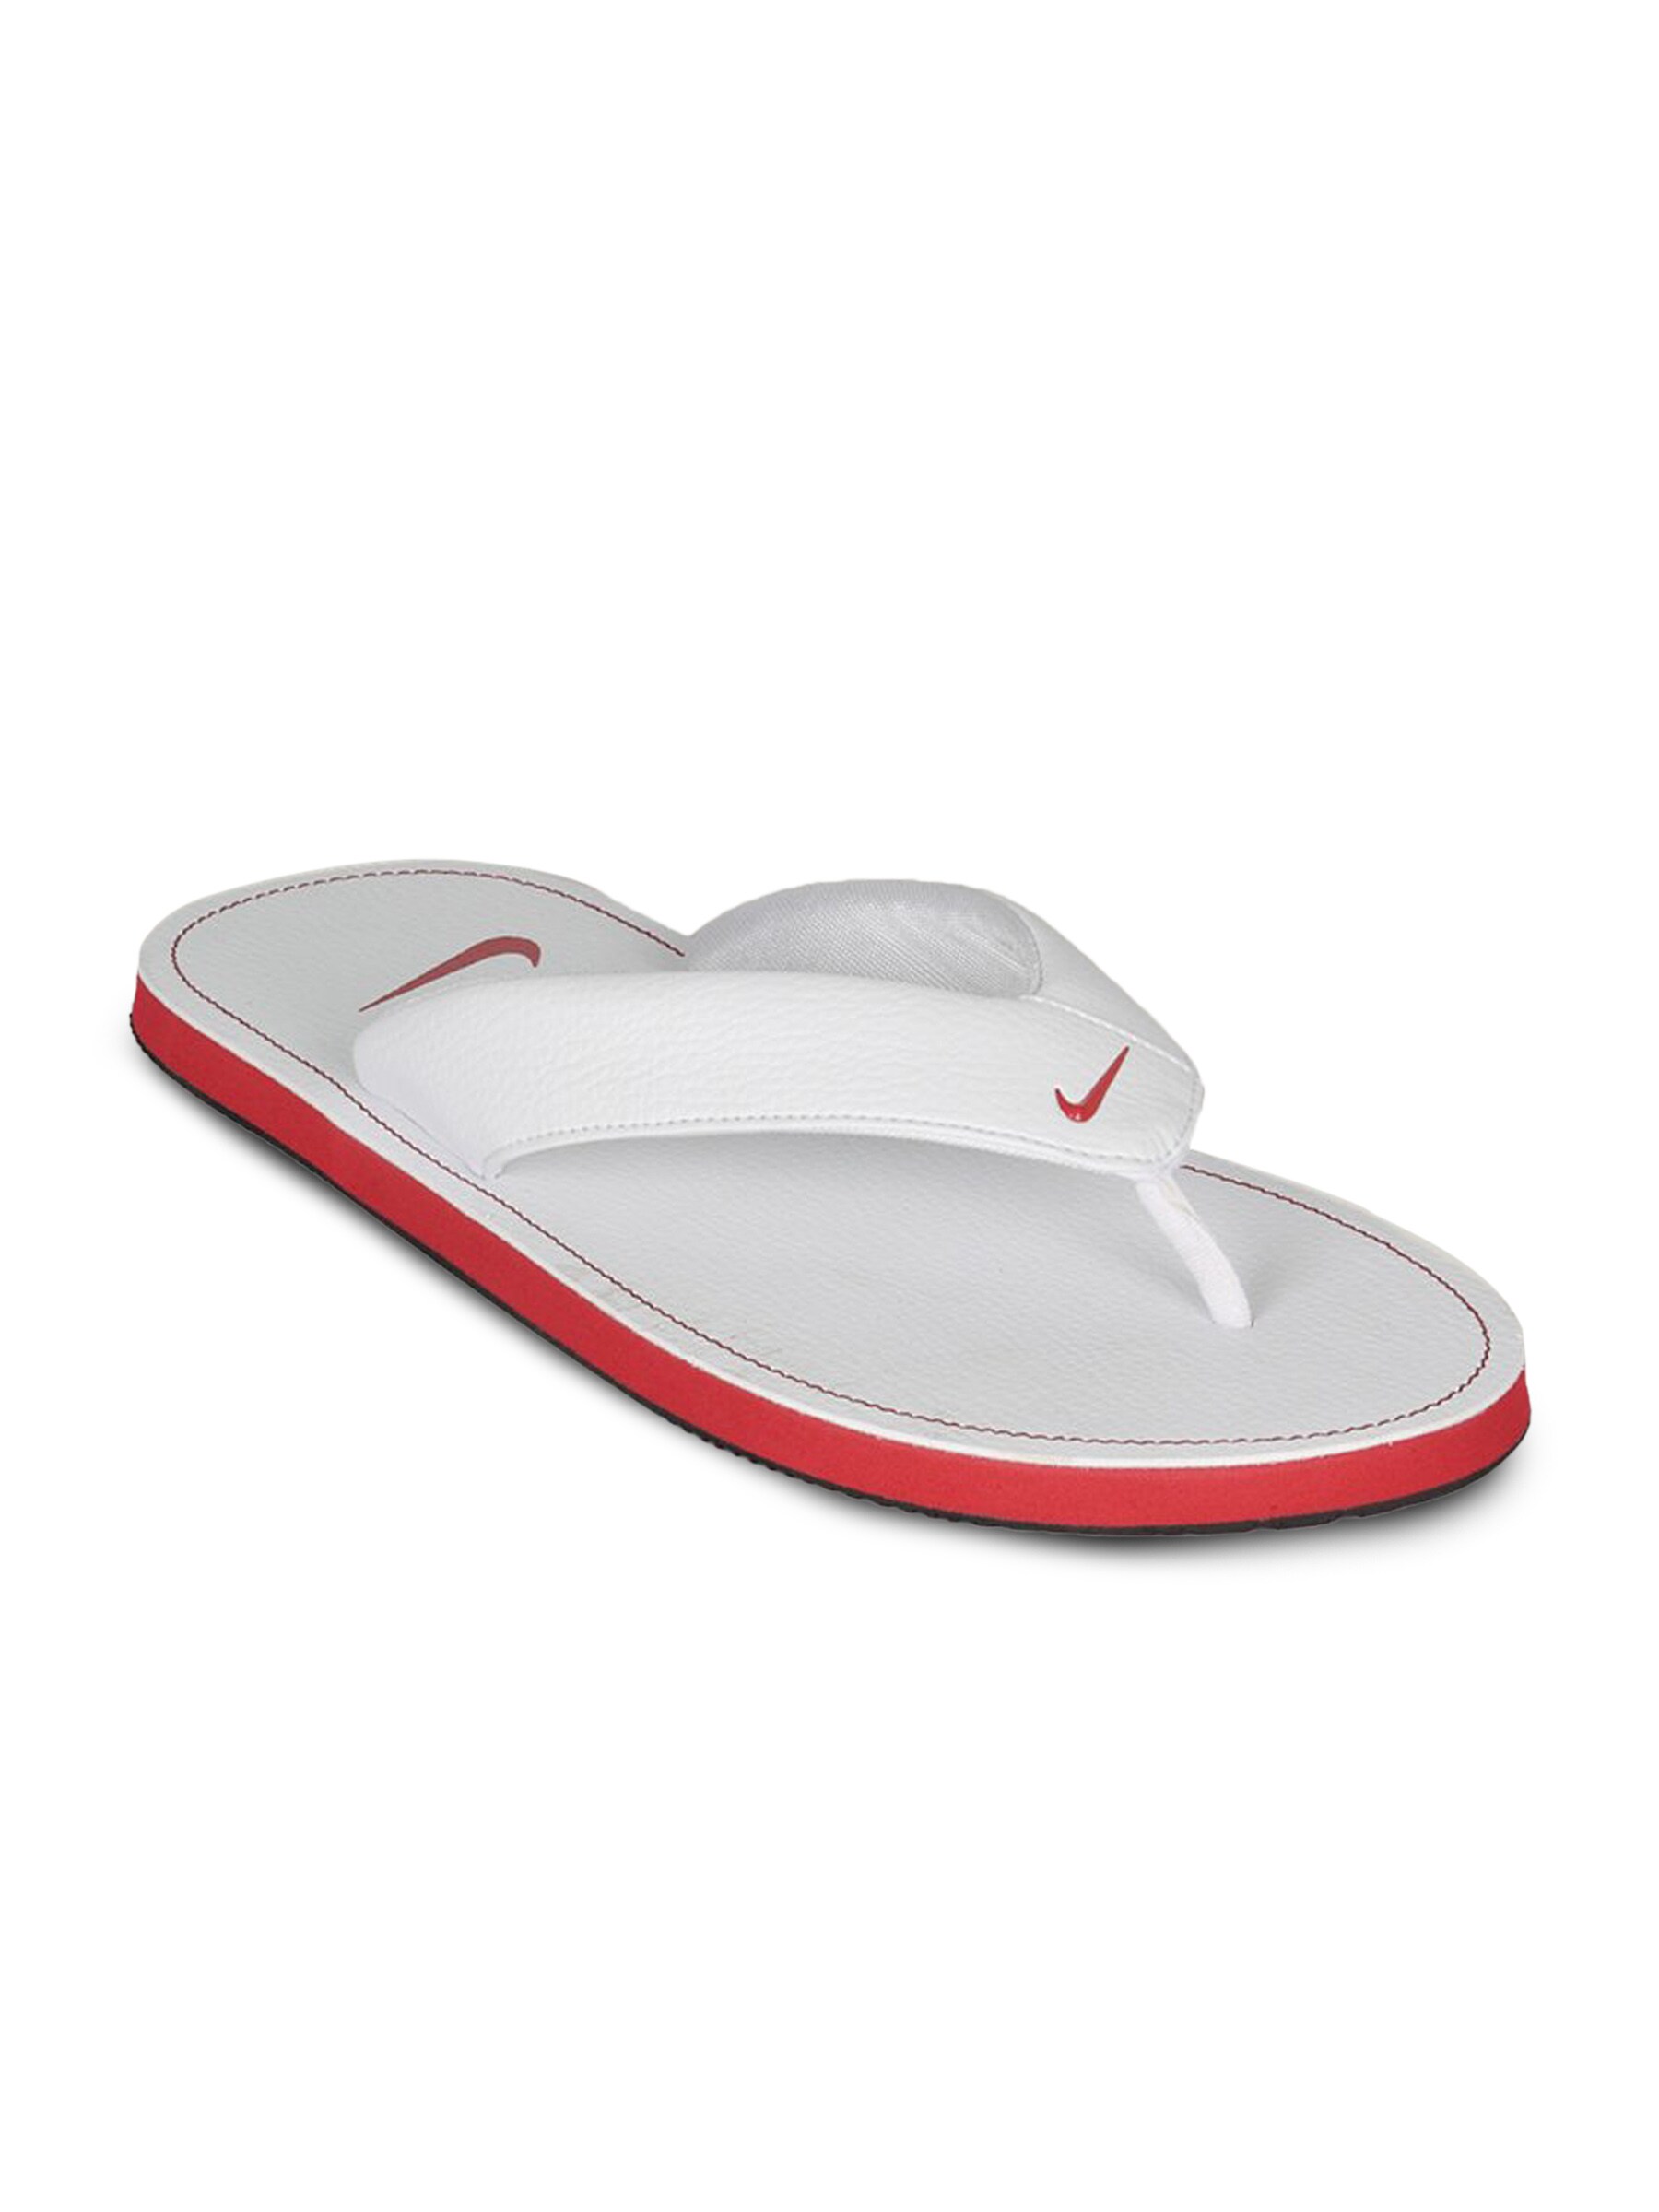 Nike Men's Chroma Thong White Red Flip Flop